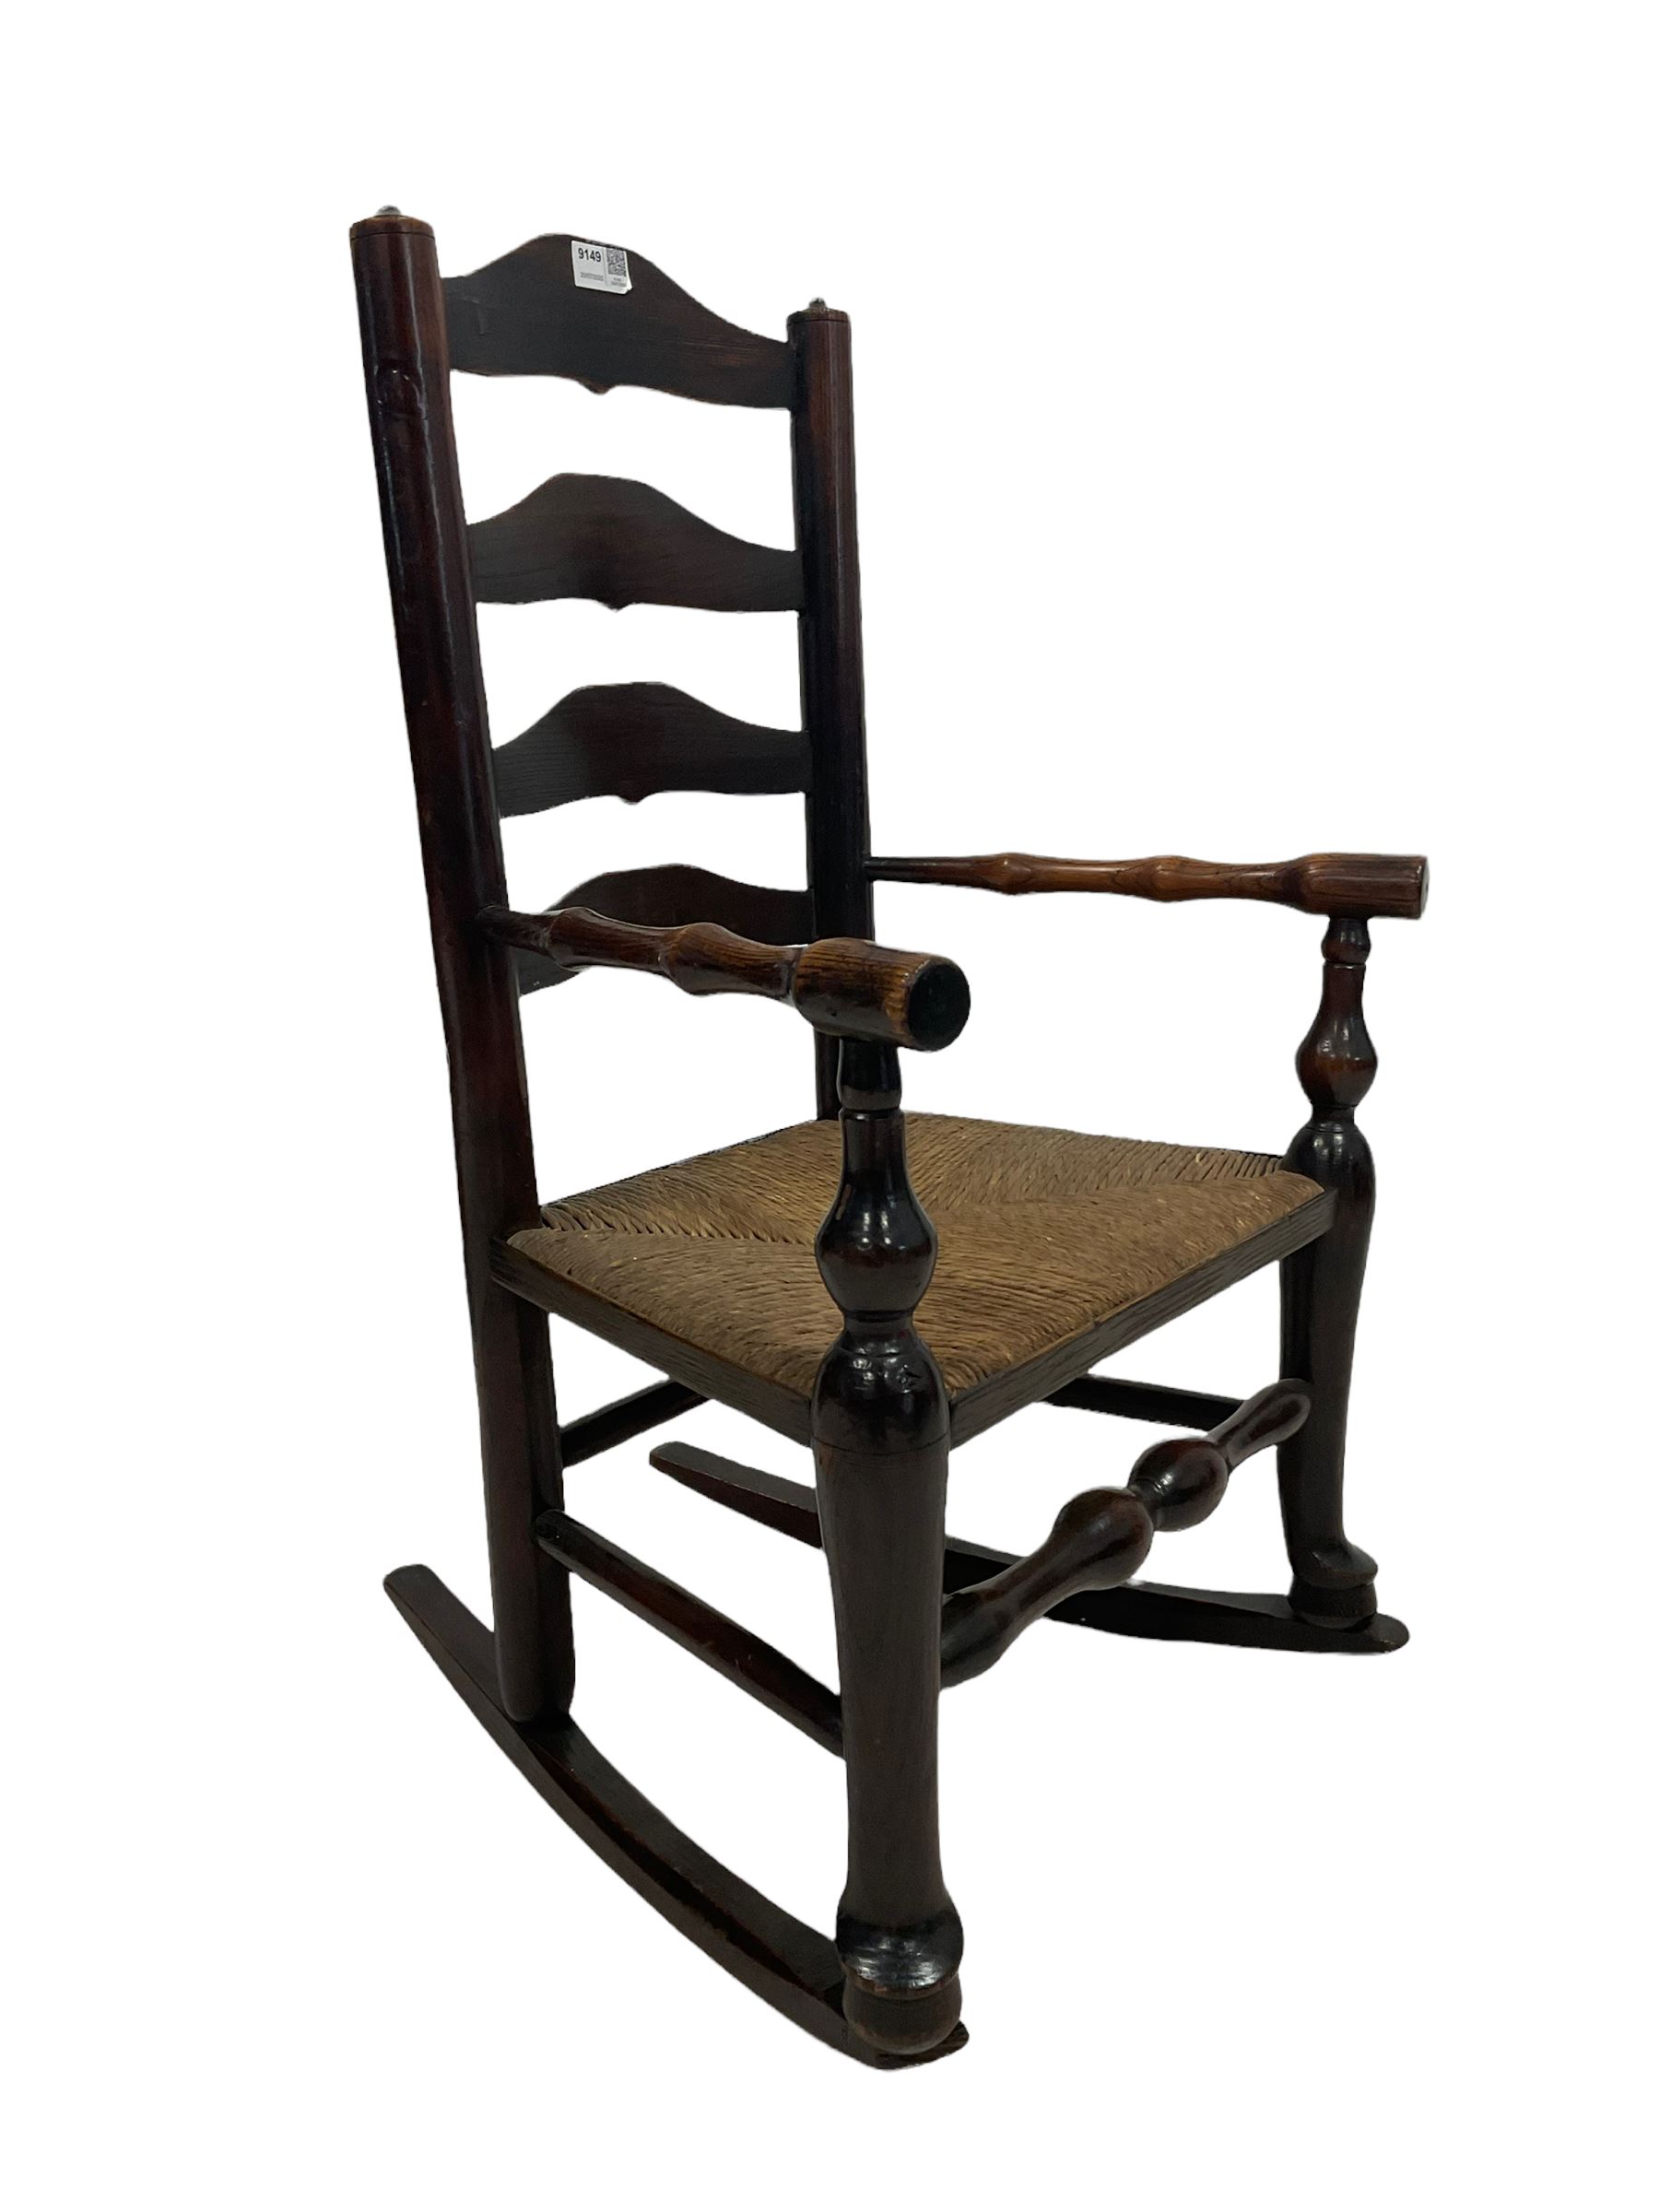 19th century childs rocking chair